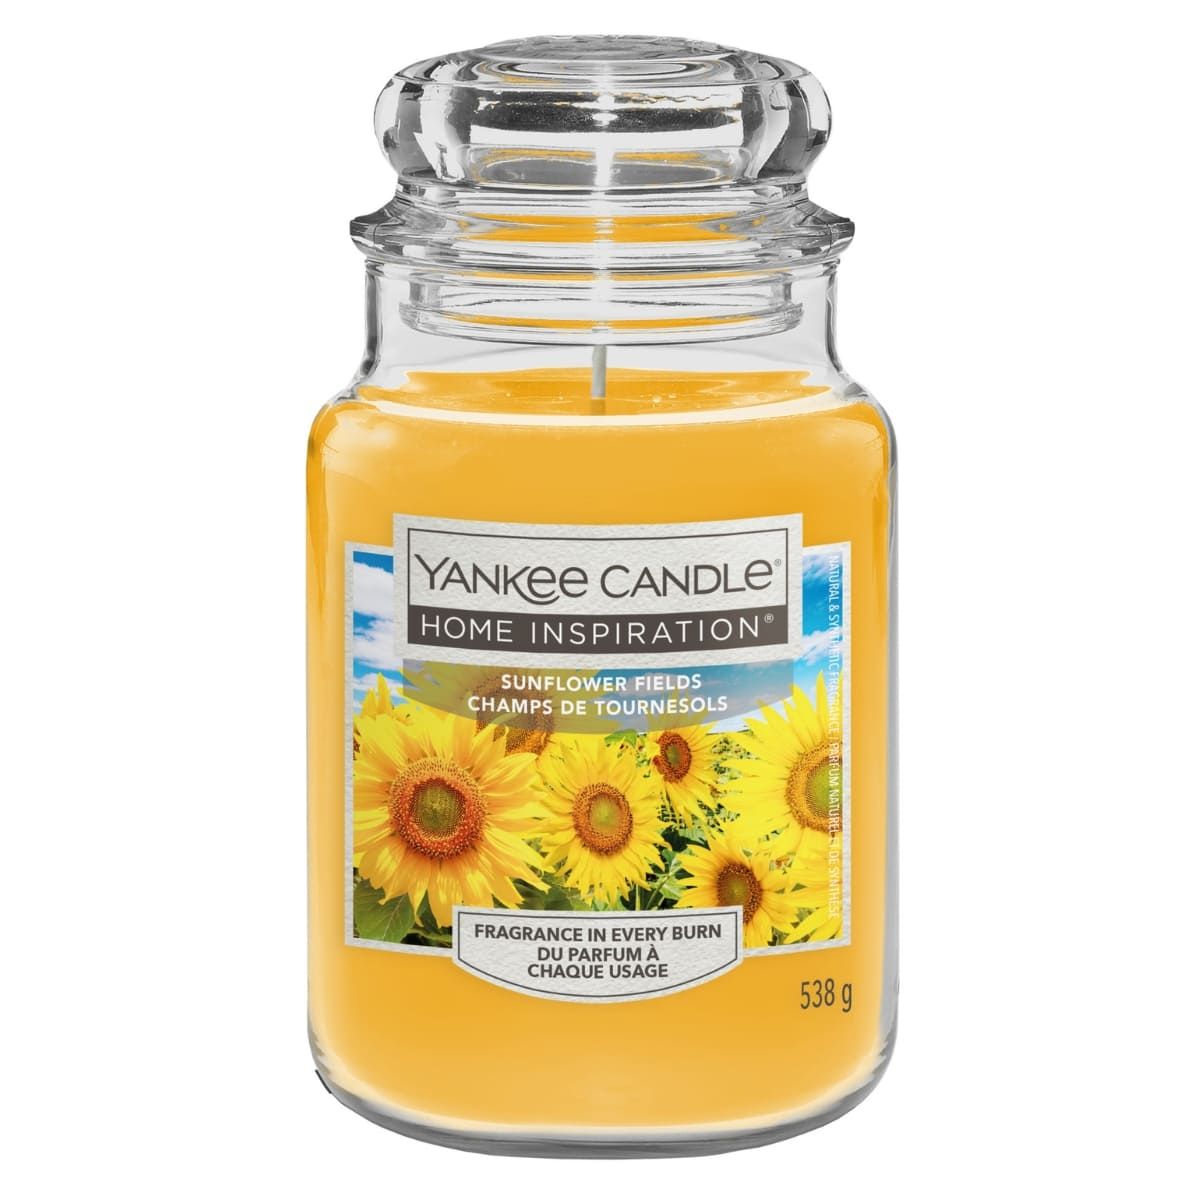 Ароматическая Свеча Yankee Candle Home Inspiration Sunflower Fields, 538 гр ароматическая свеча yankee candle home inspiration sugared blossom 538 гр